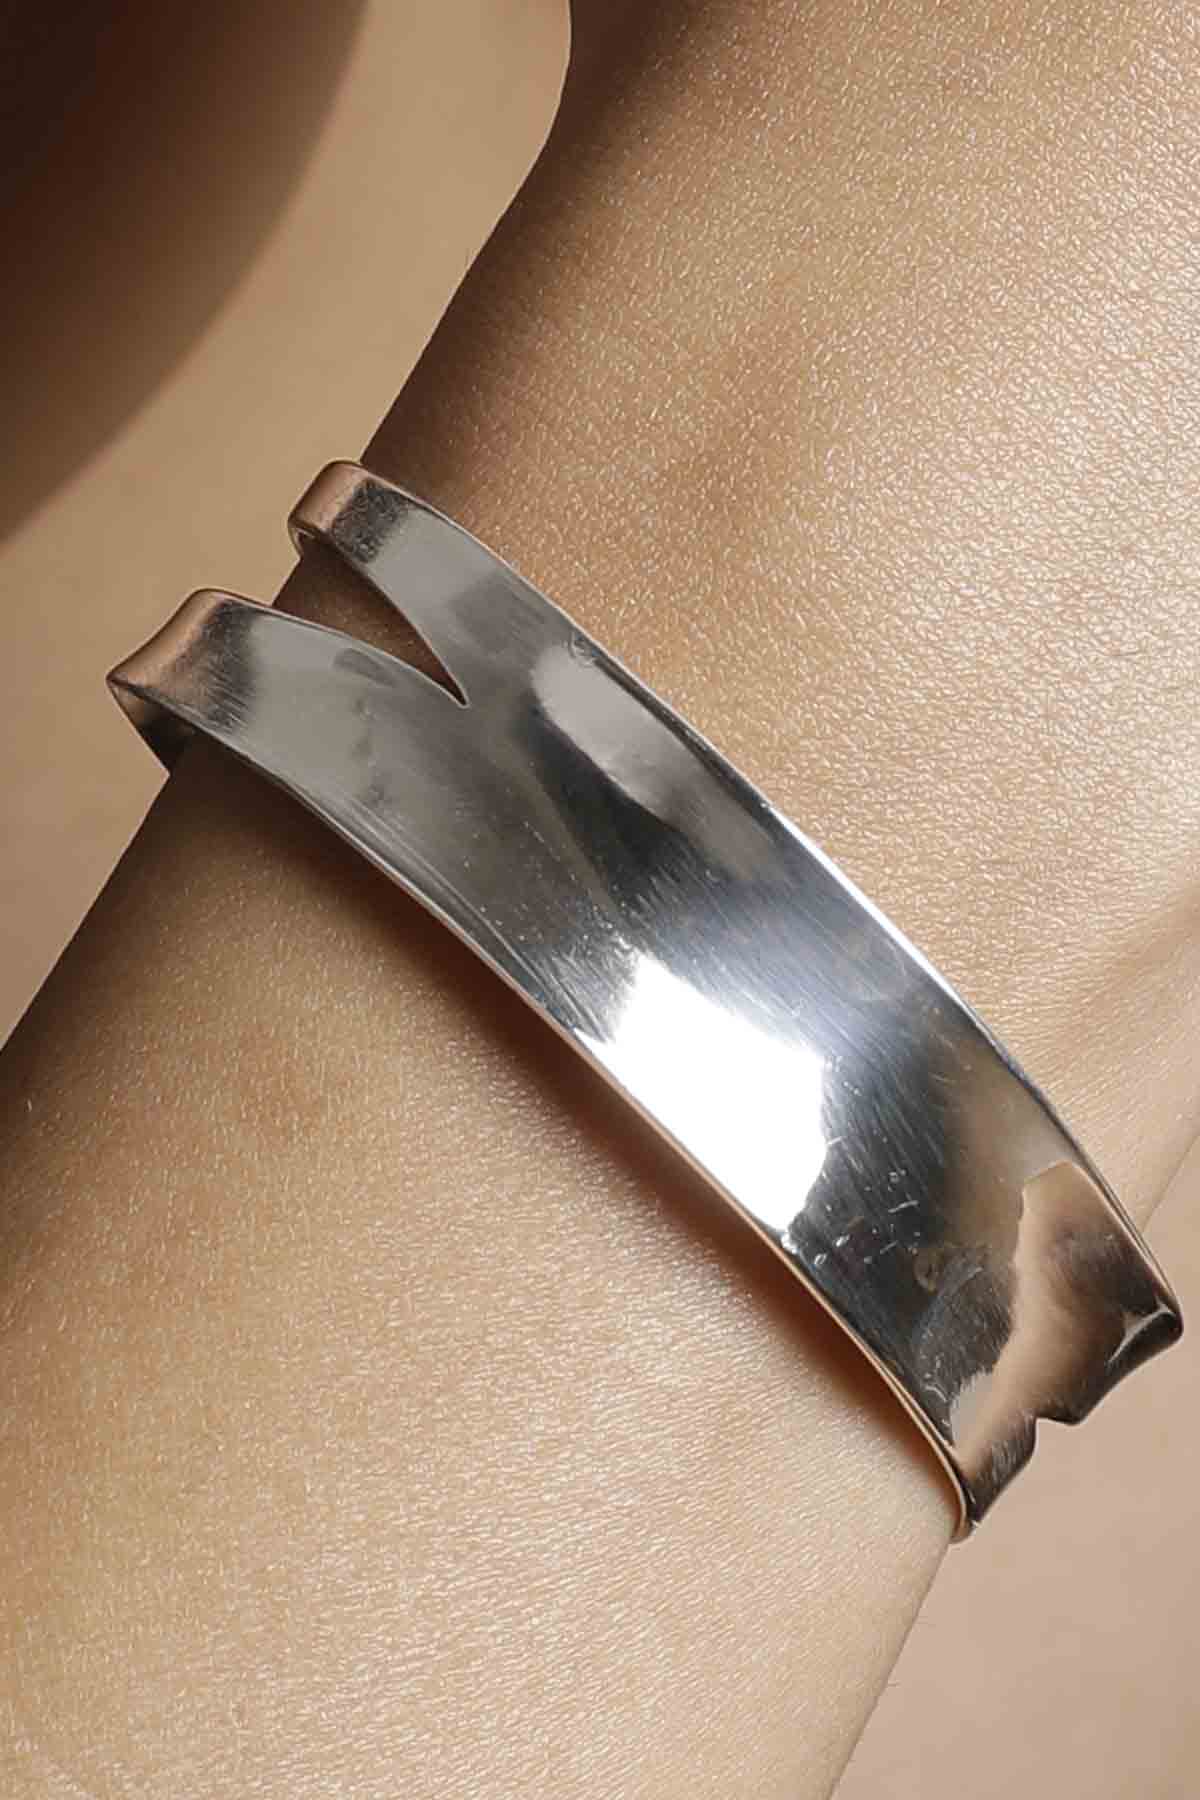 The Silver Staple Bracelet